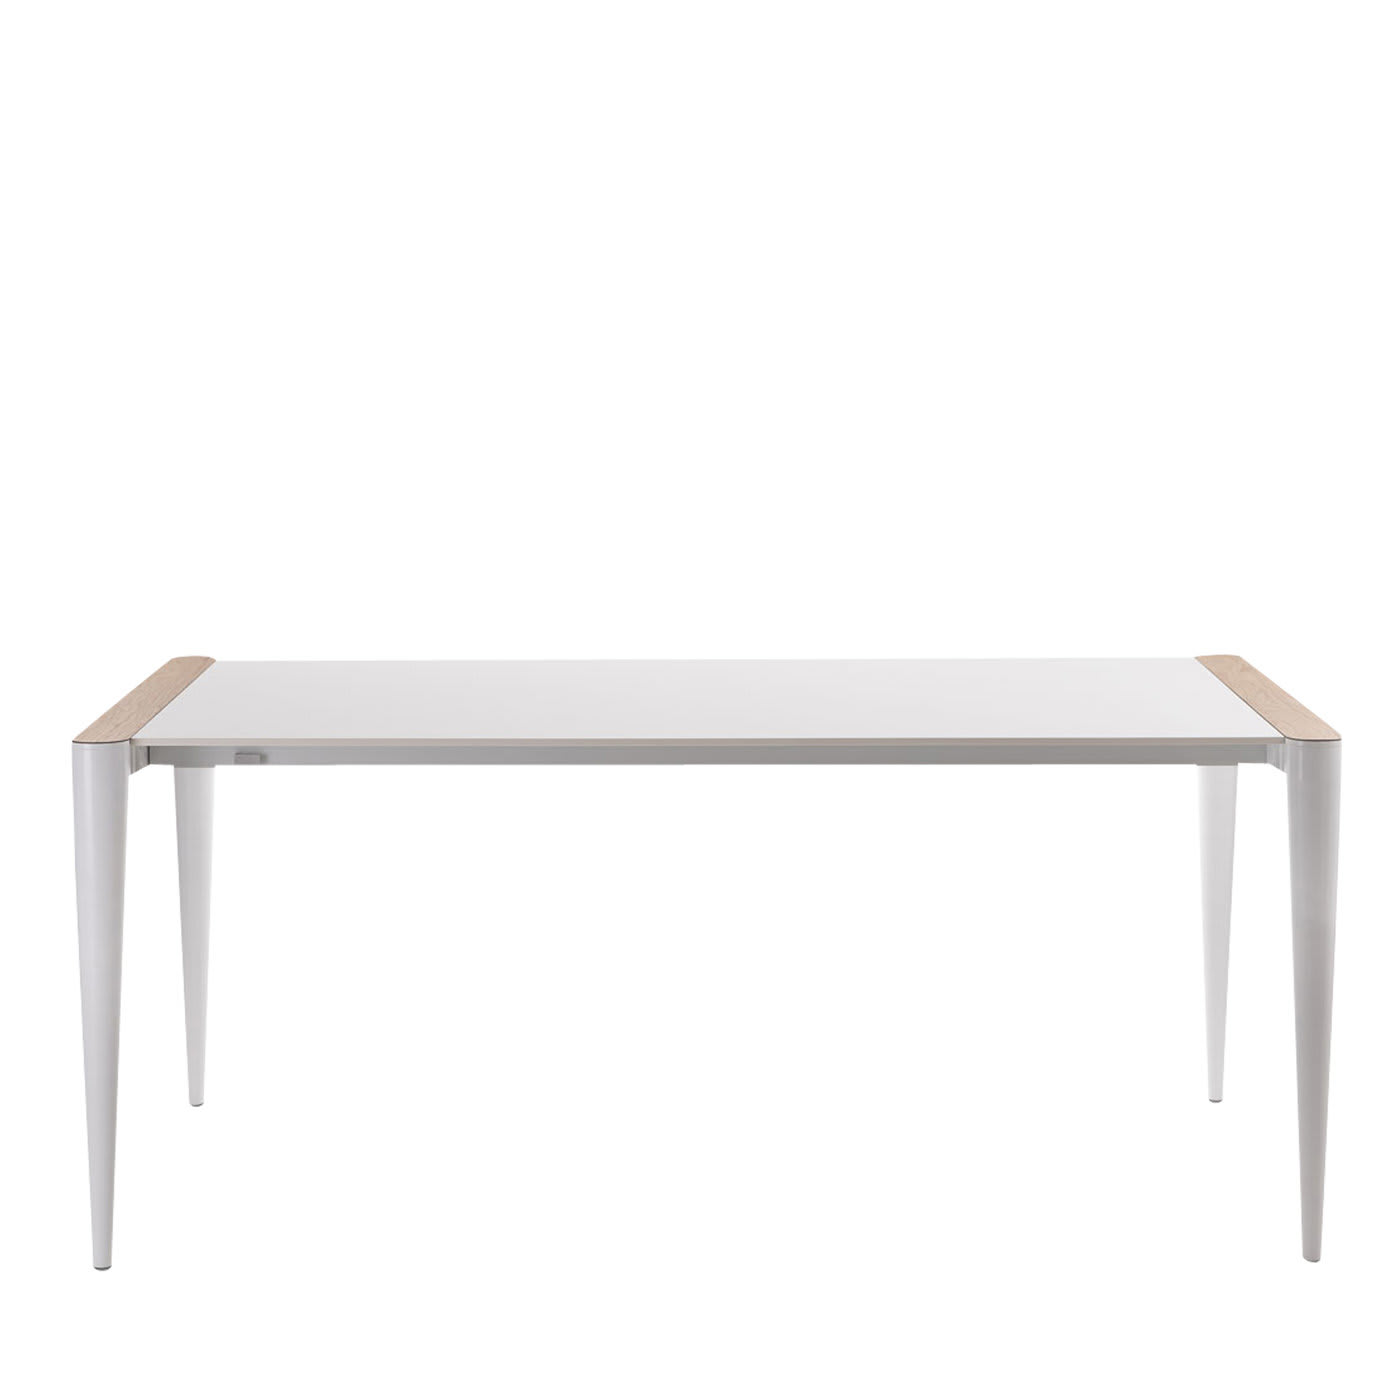 Bolero White Extendable Table by Renato Zamberlan - Horm